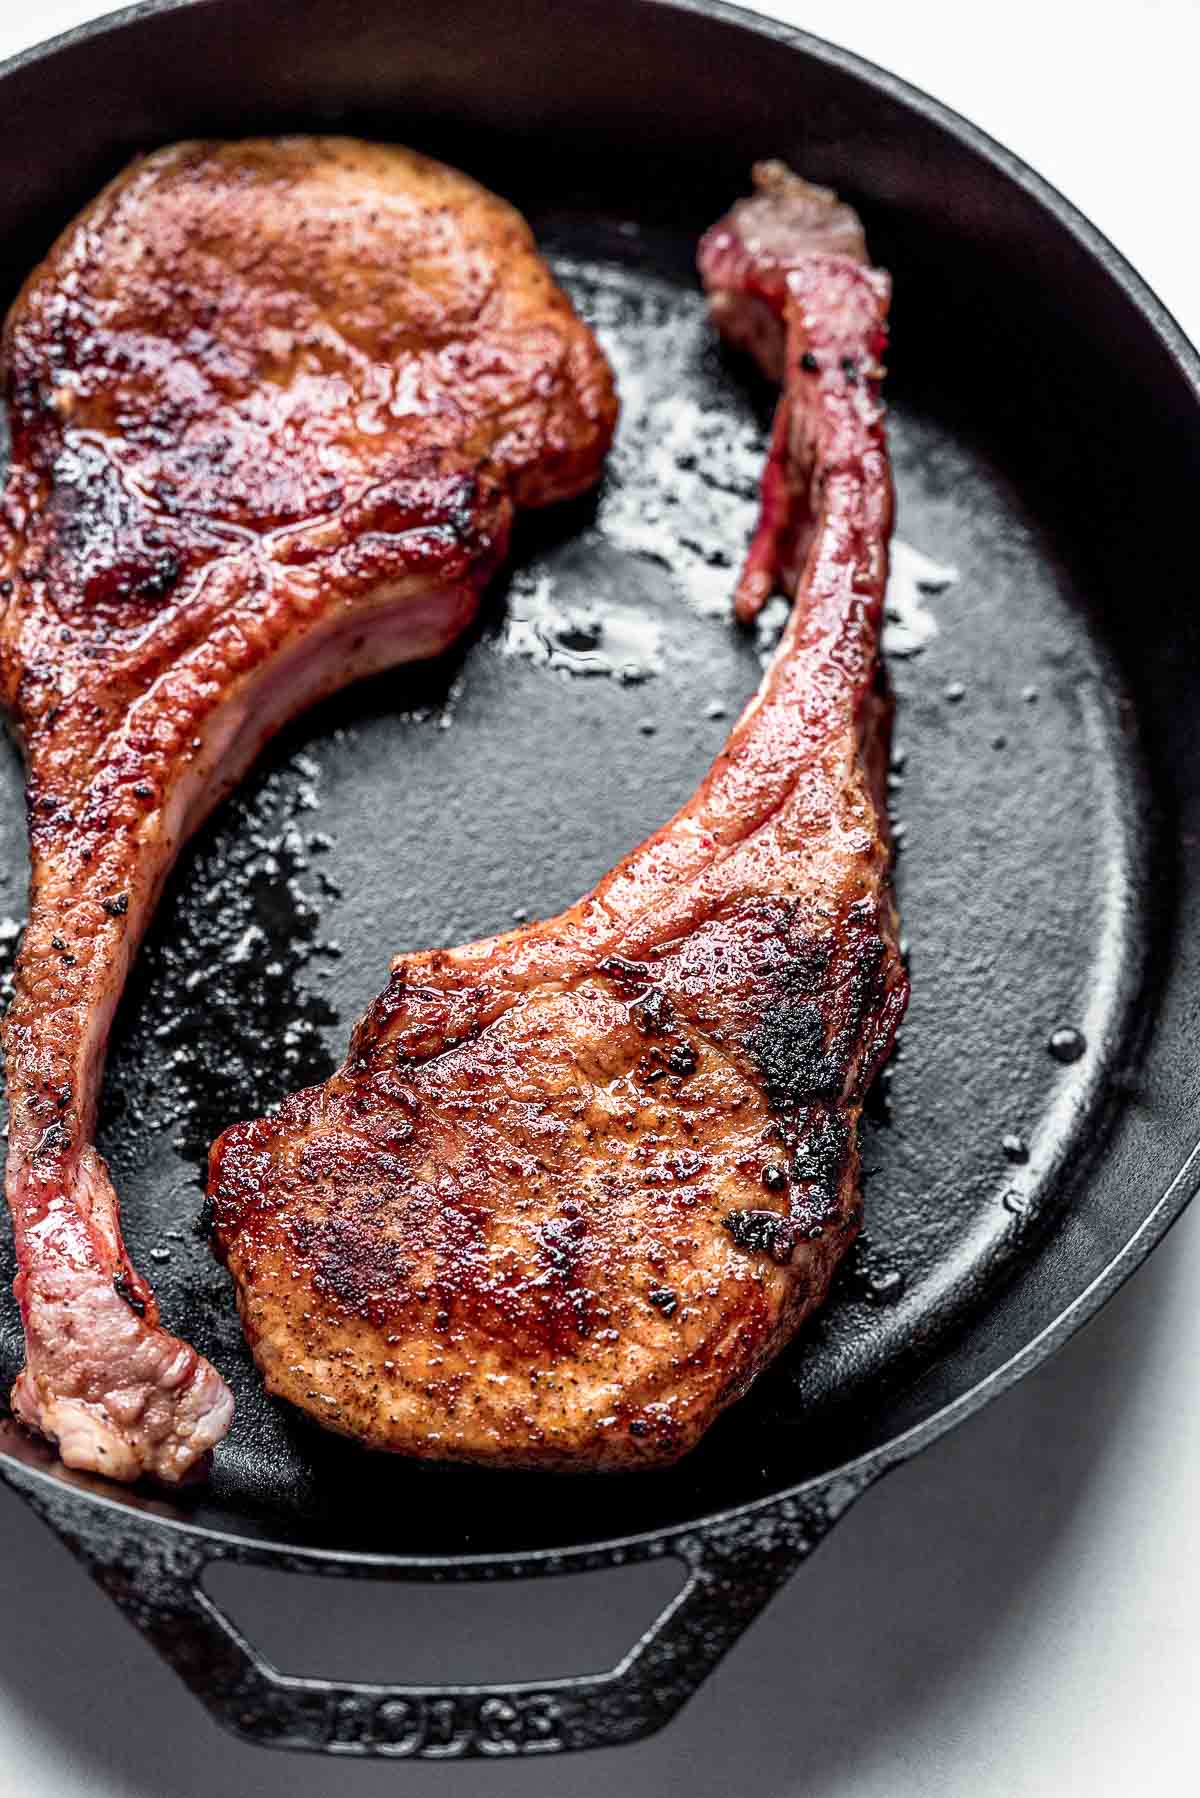 pan seared pork chops seared in skillet.